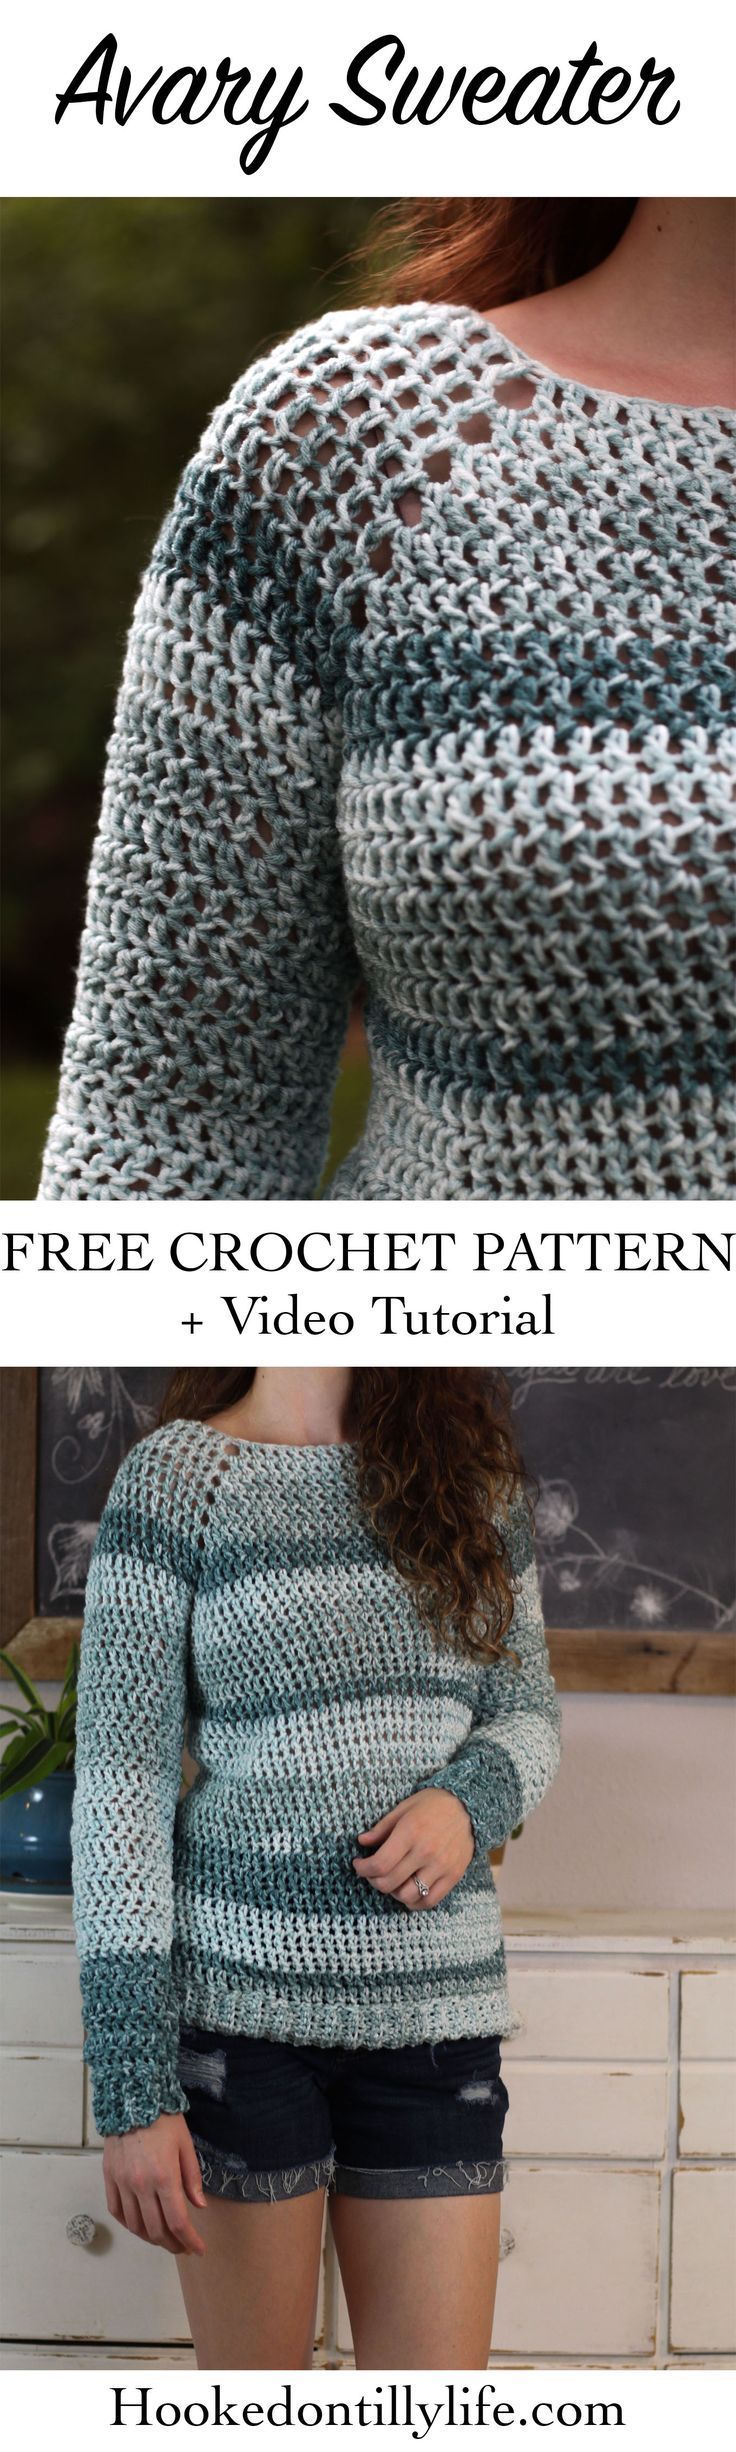 The Avary Sweater – Free Crochet Pattern